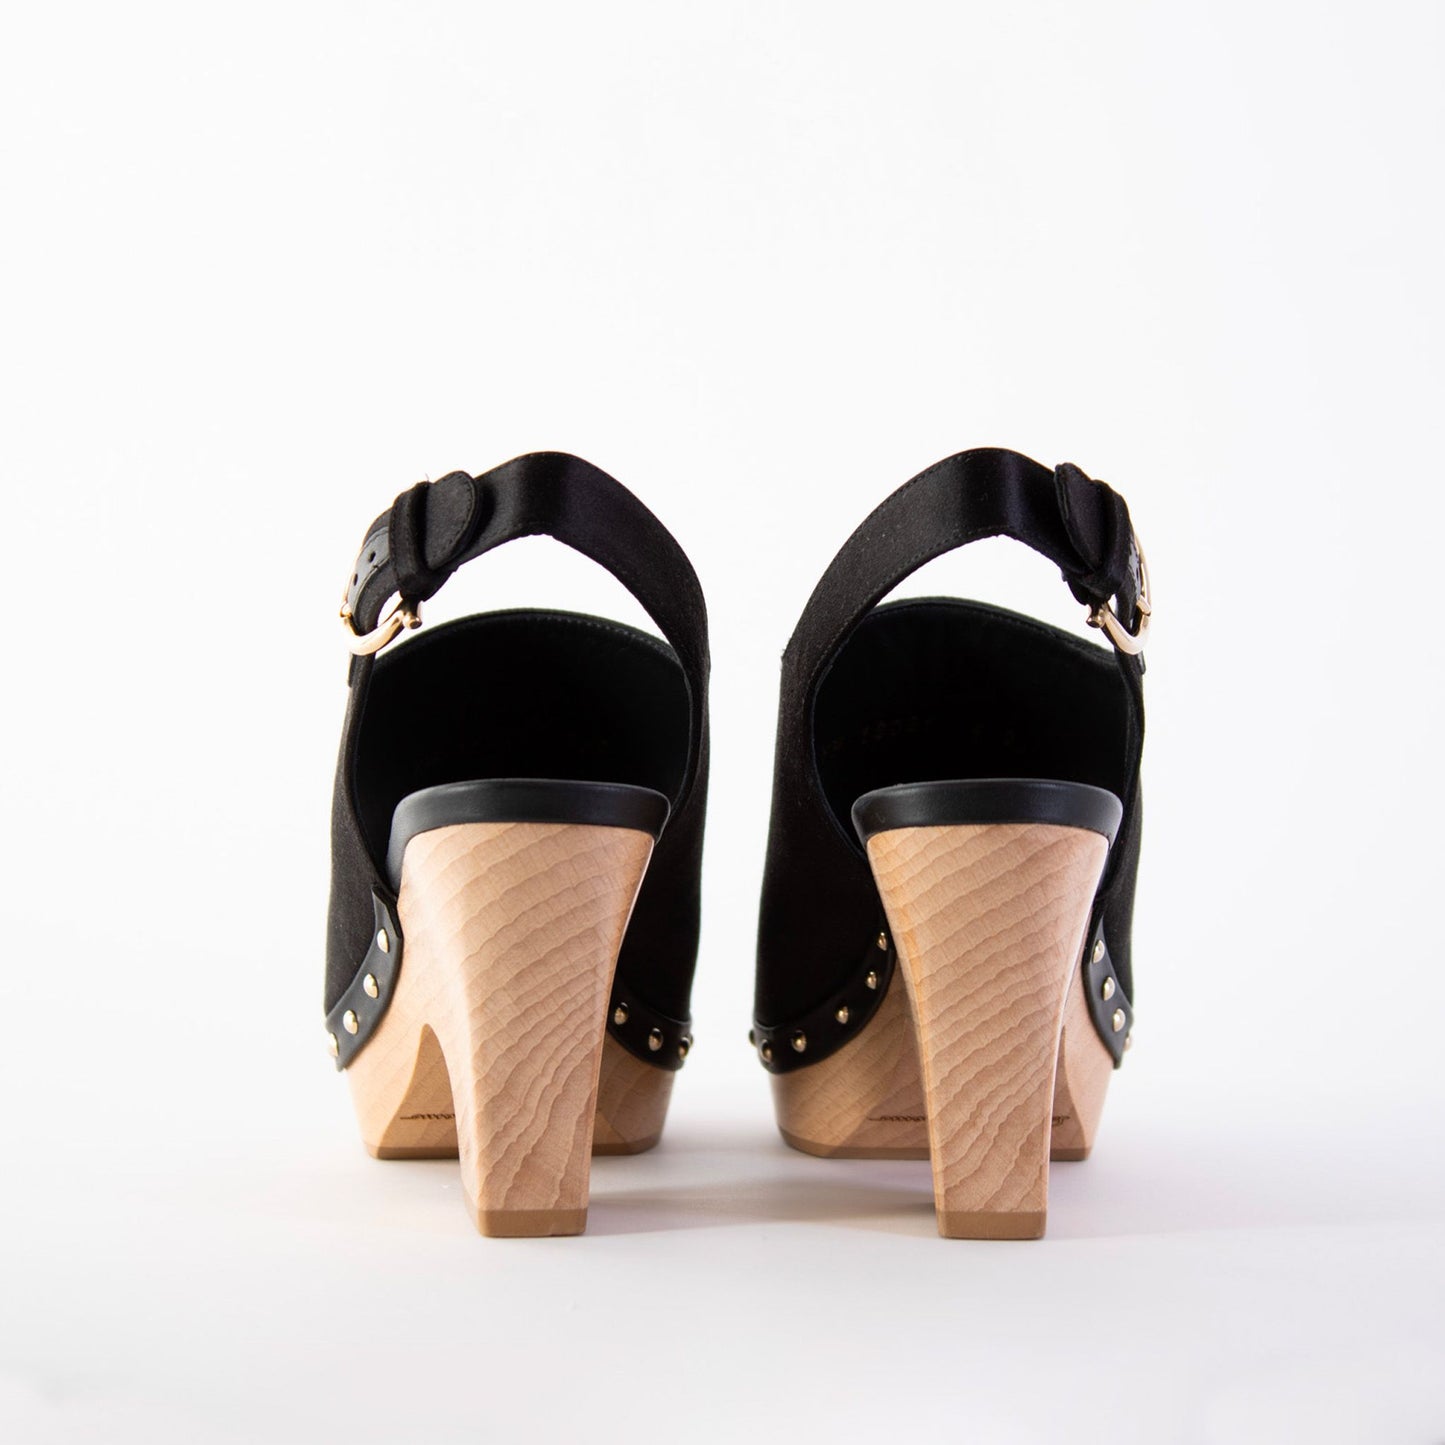 Salvatore Ferragamo Susanne Black Leather and Fabric Wedge Sandals